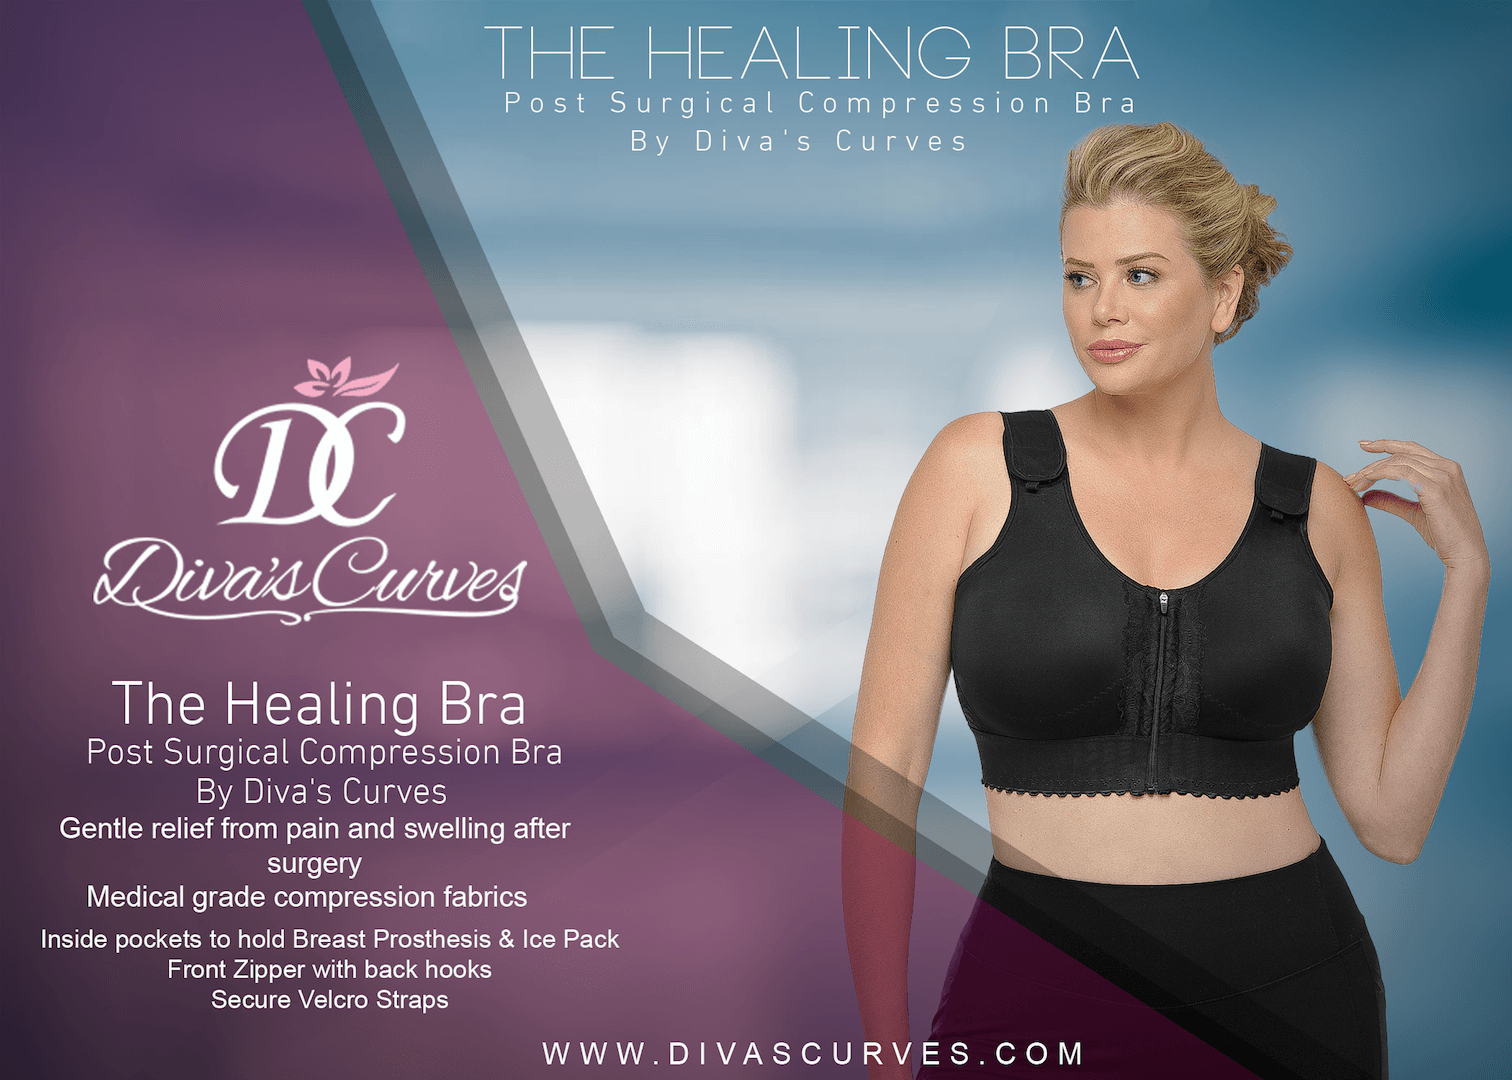 Diva's Curves Sport Compression Bras and Comfy Compression Bras